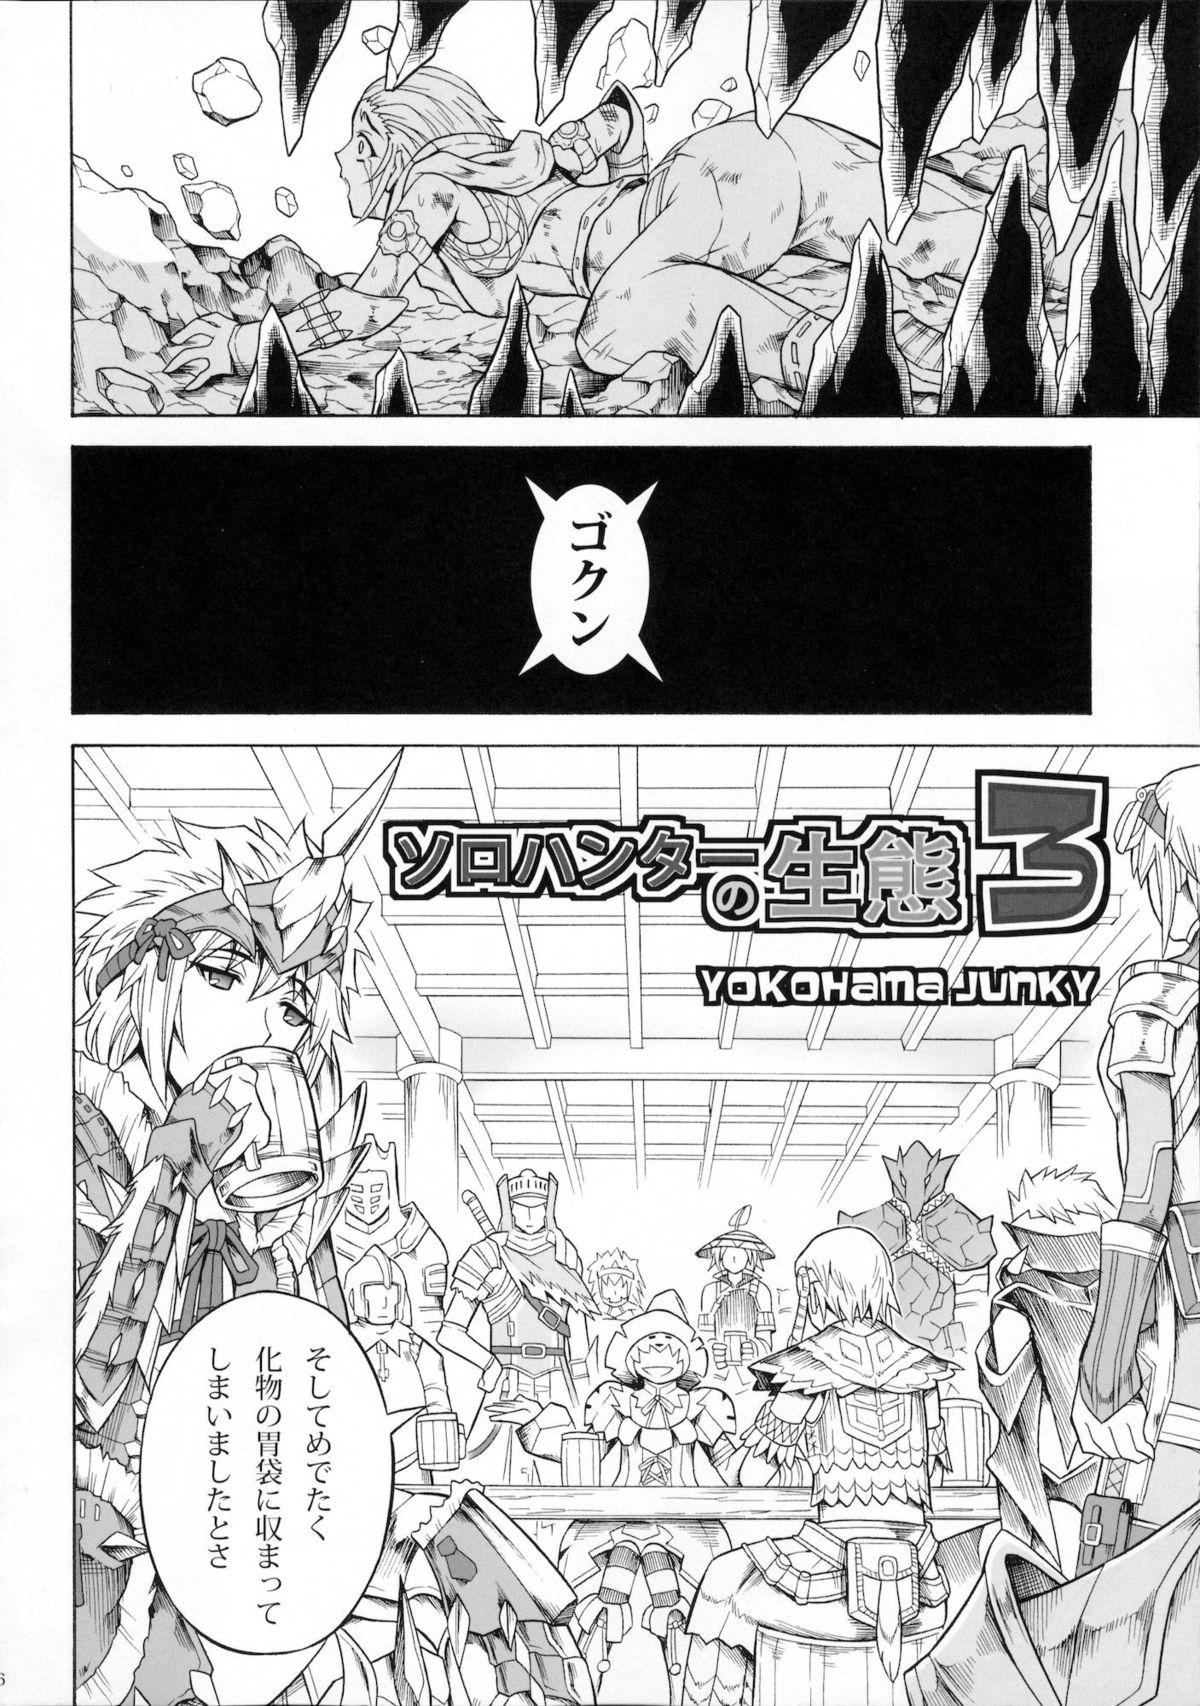 Dicks Solo Hunter no Seitai 3 - Monster hunter Fist - Page 5